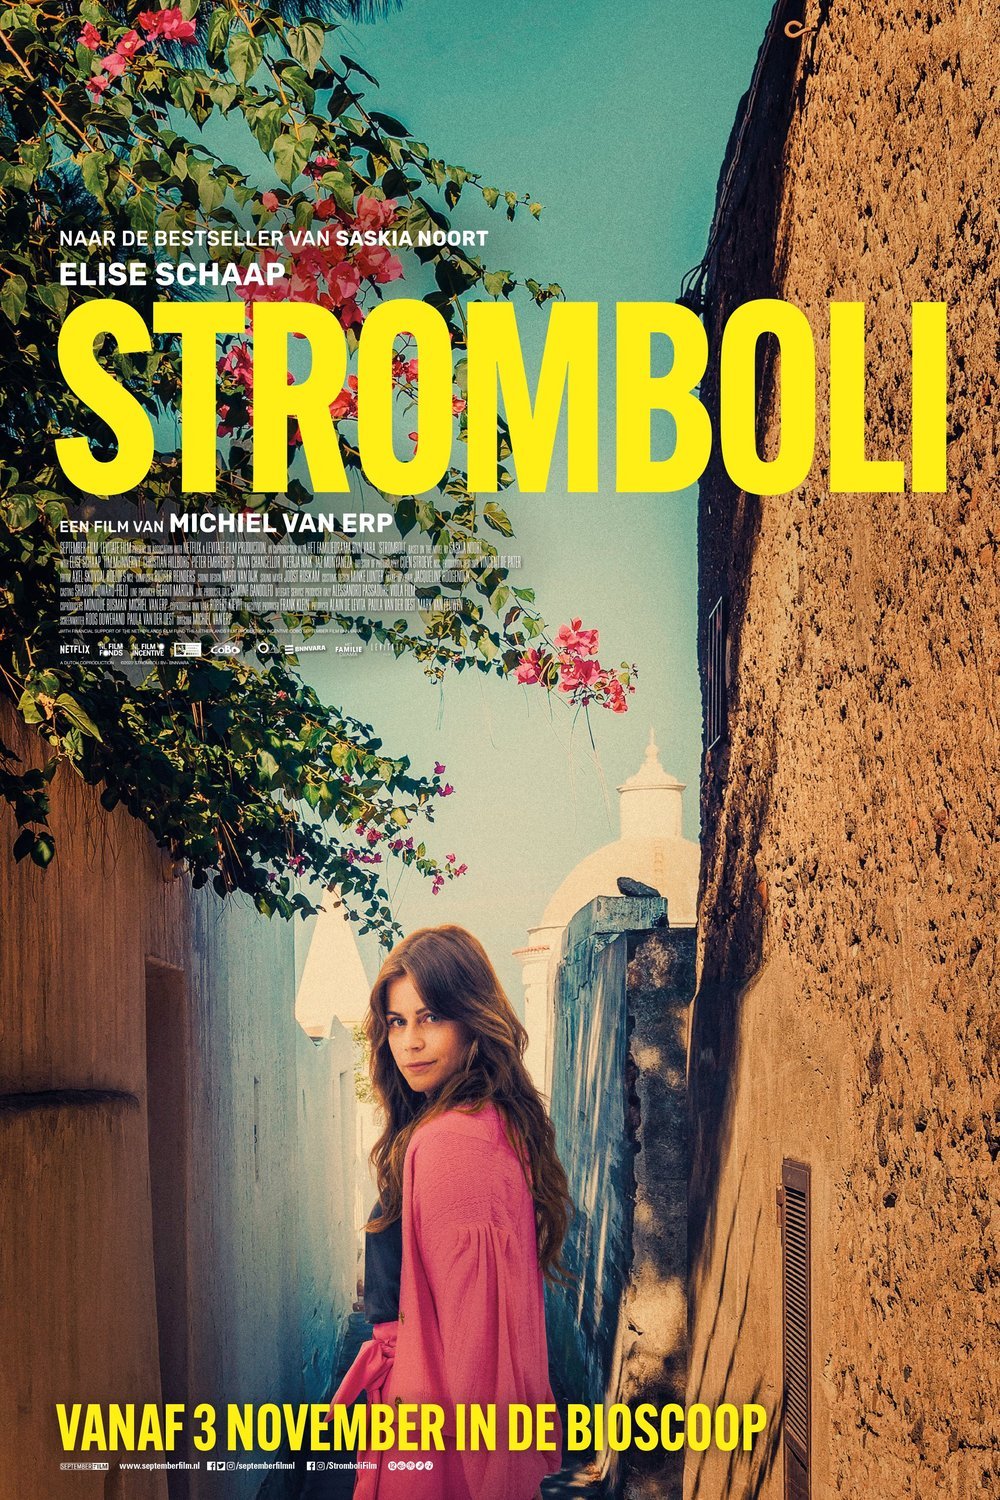 Dutch poster of the movie Stromboli